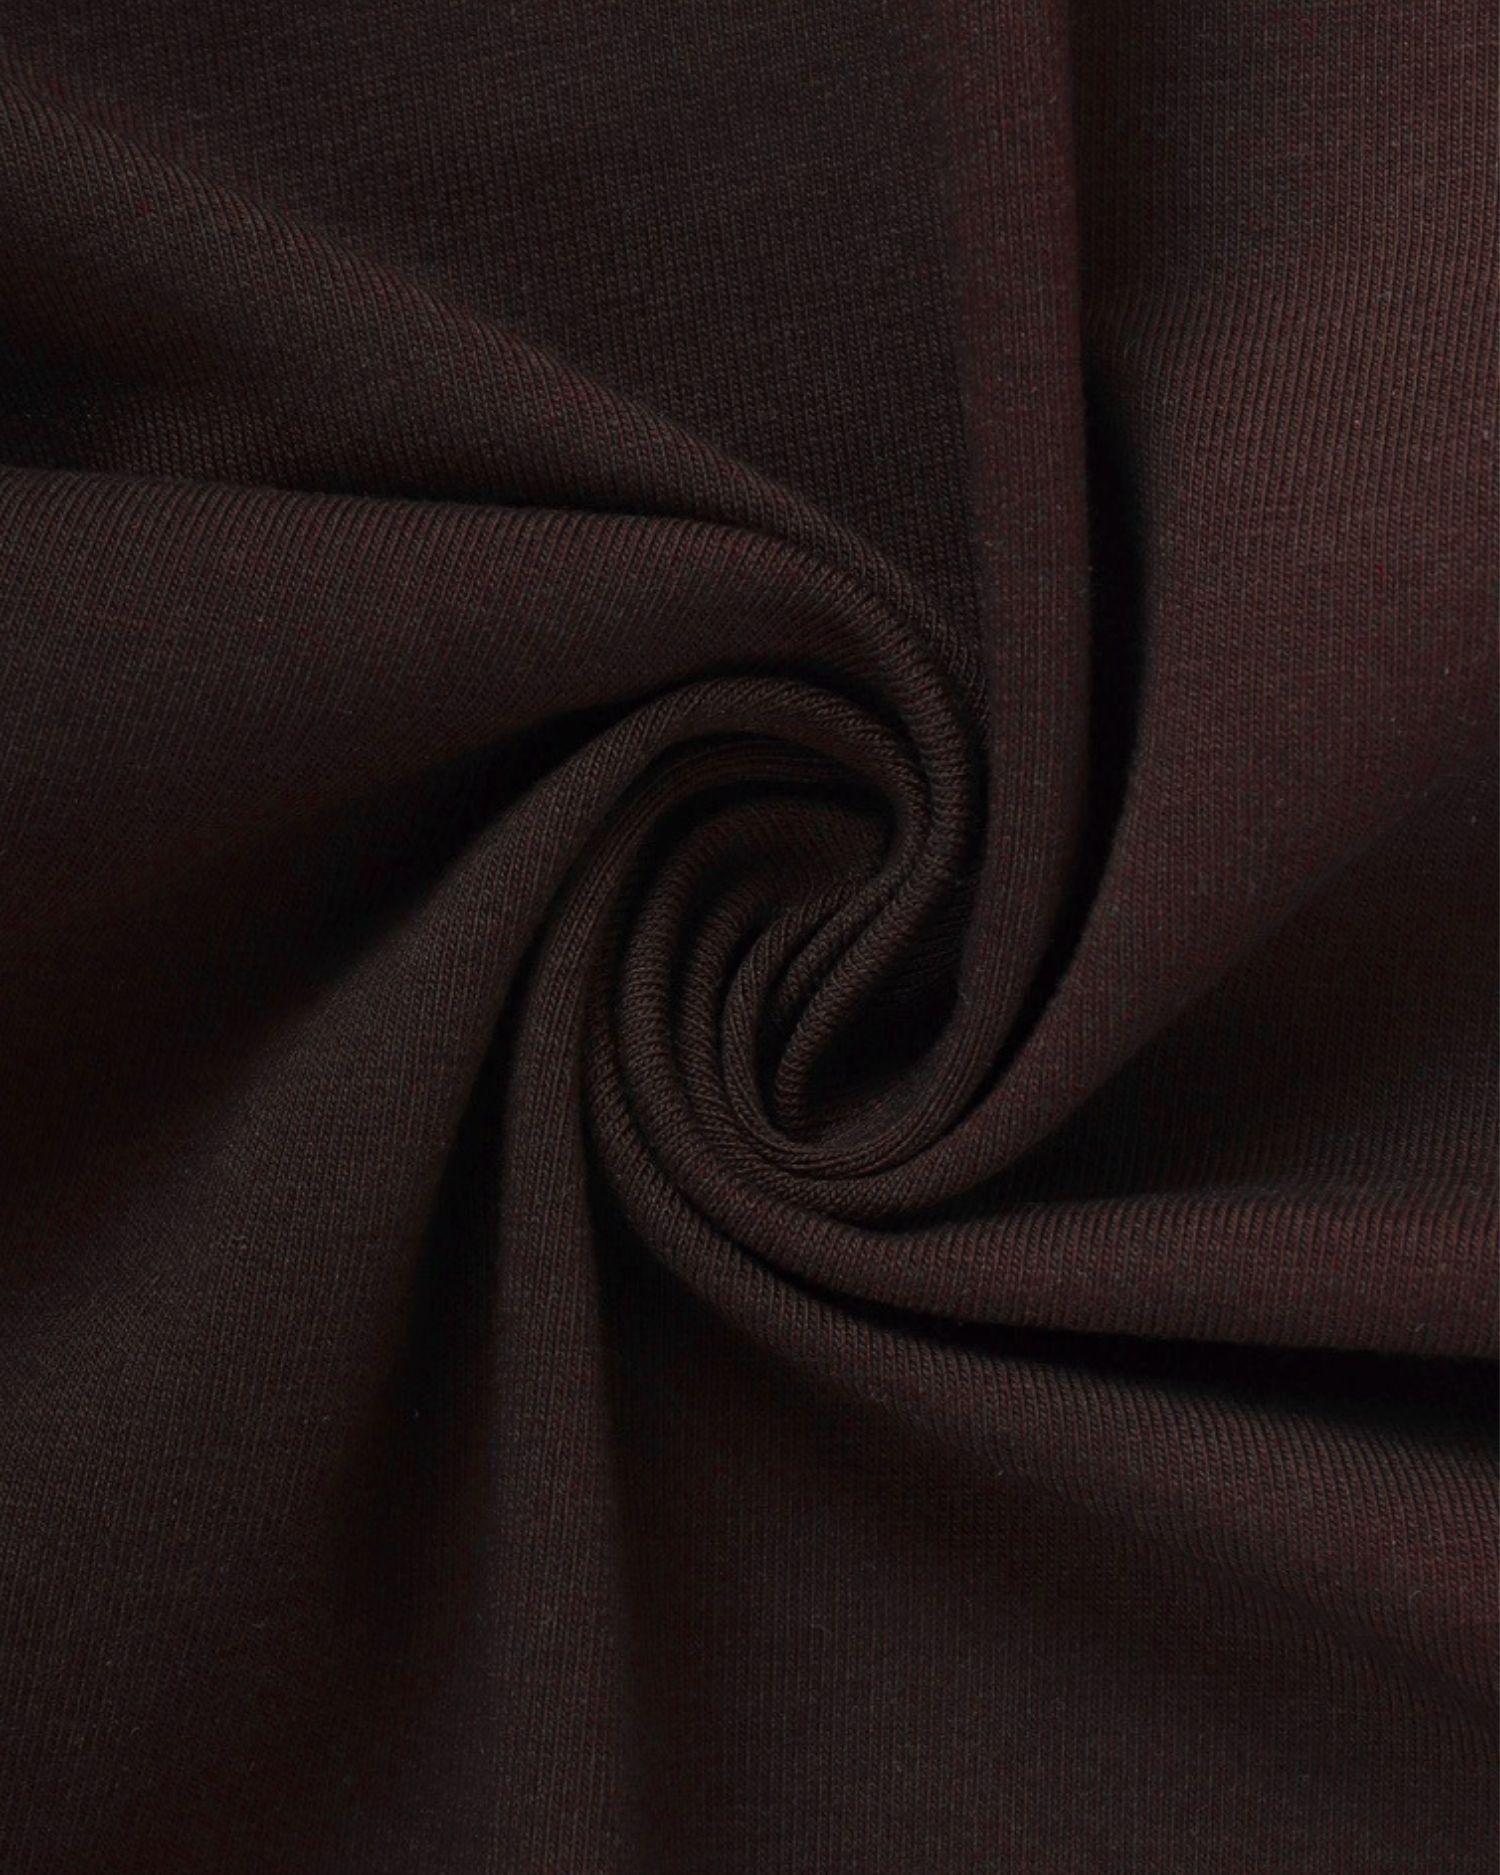 Cotton single Jersey with elastane, 1 meter, 185gr/m2, brown